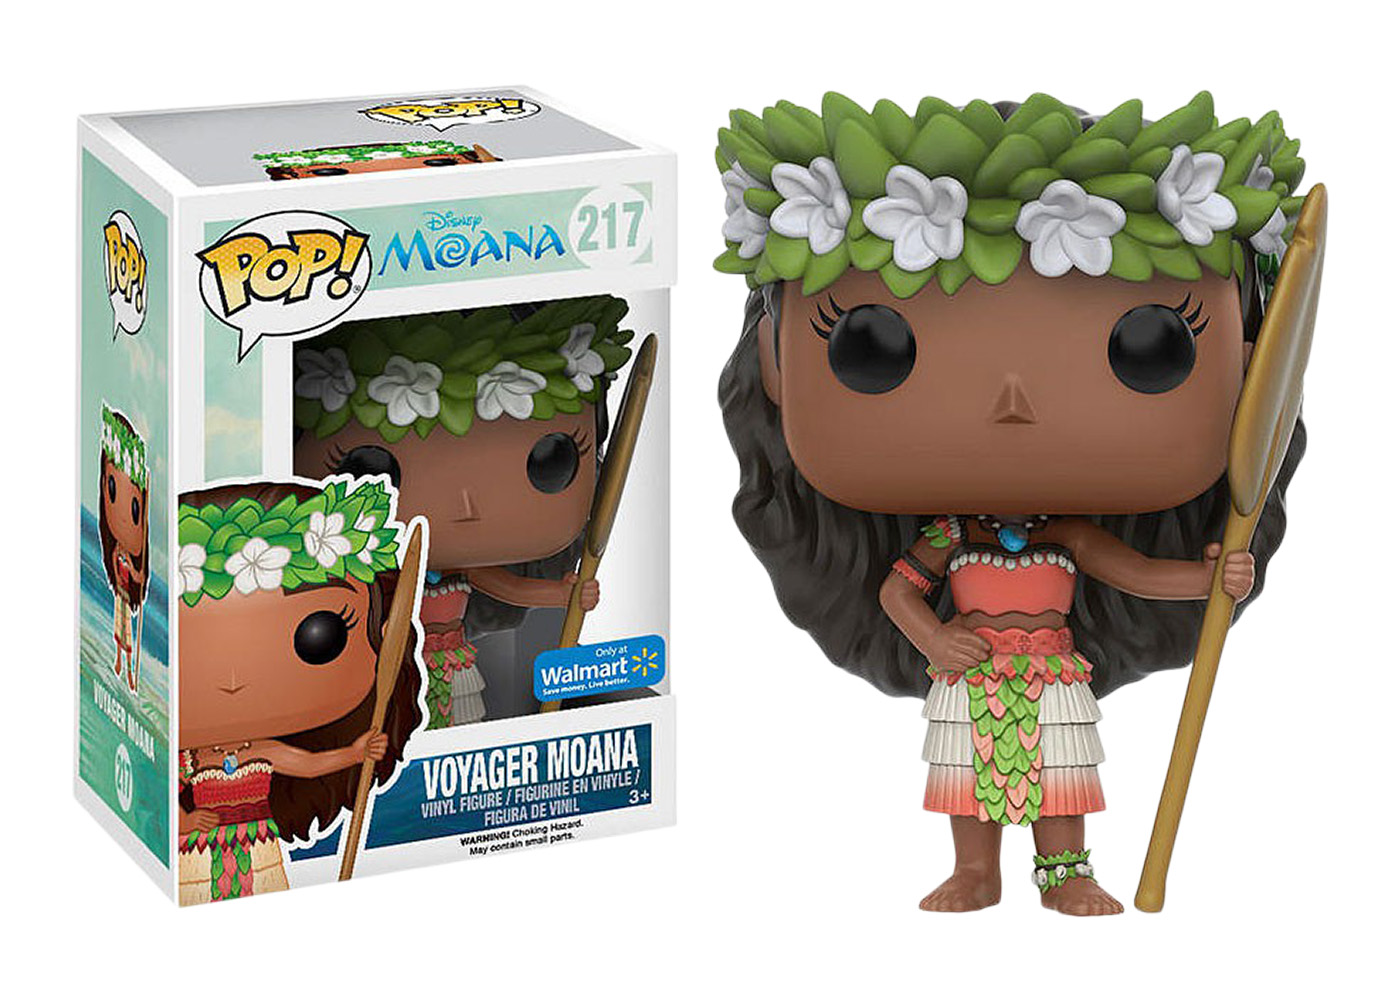 Funko Pop! Disney Moana Voyager Moana Walmart Exclusive Figure